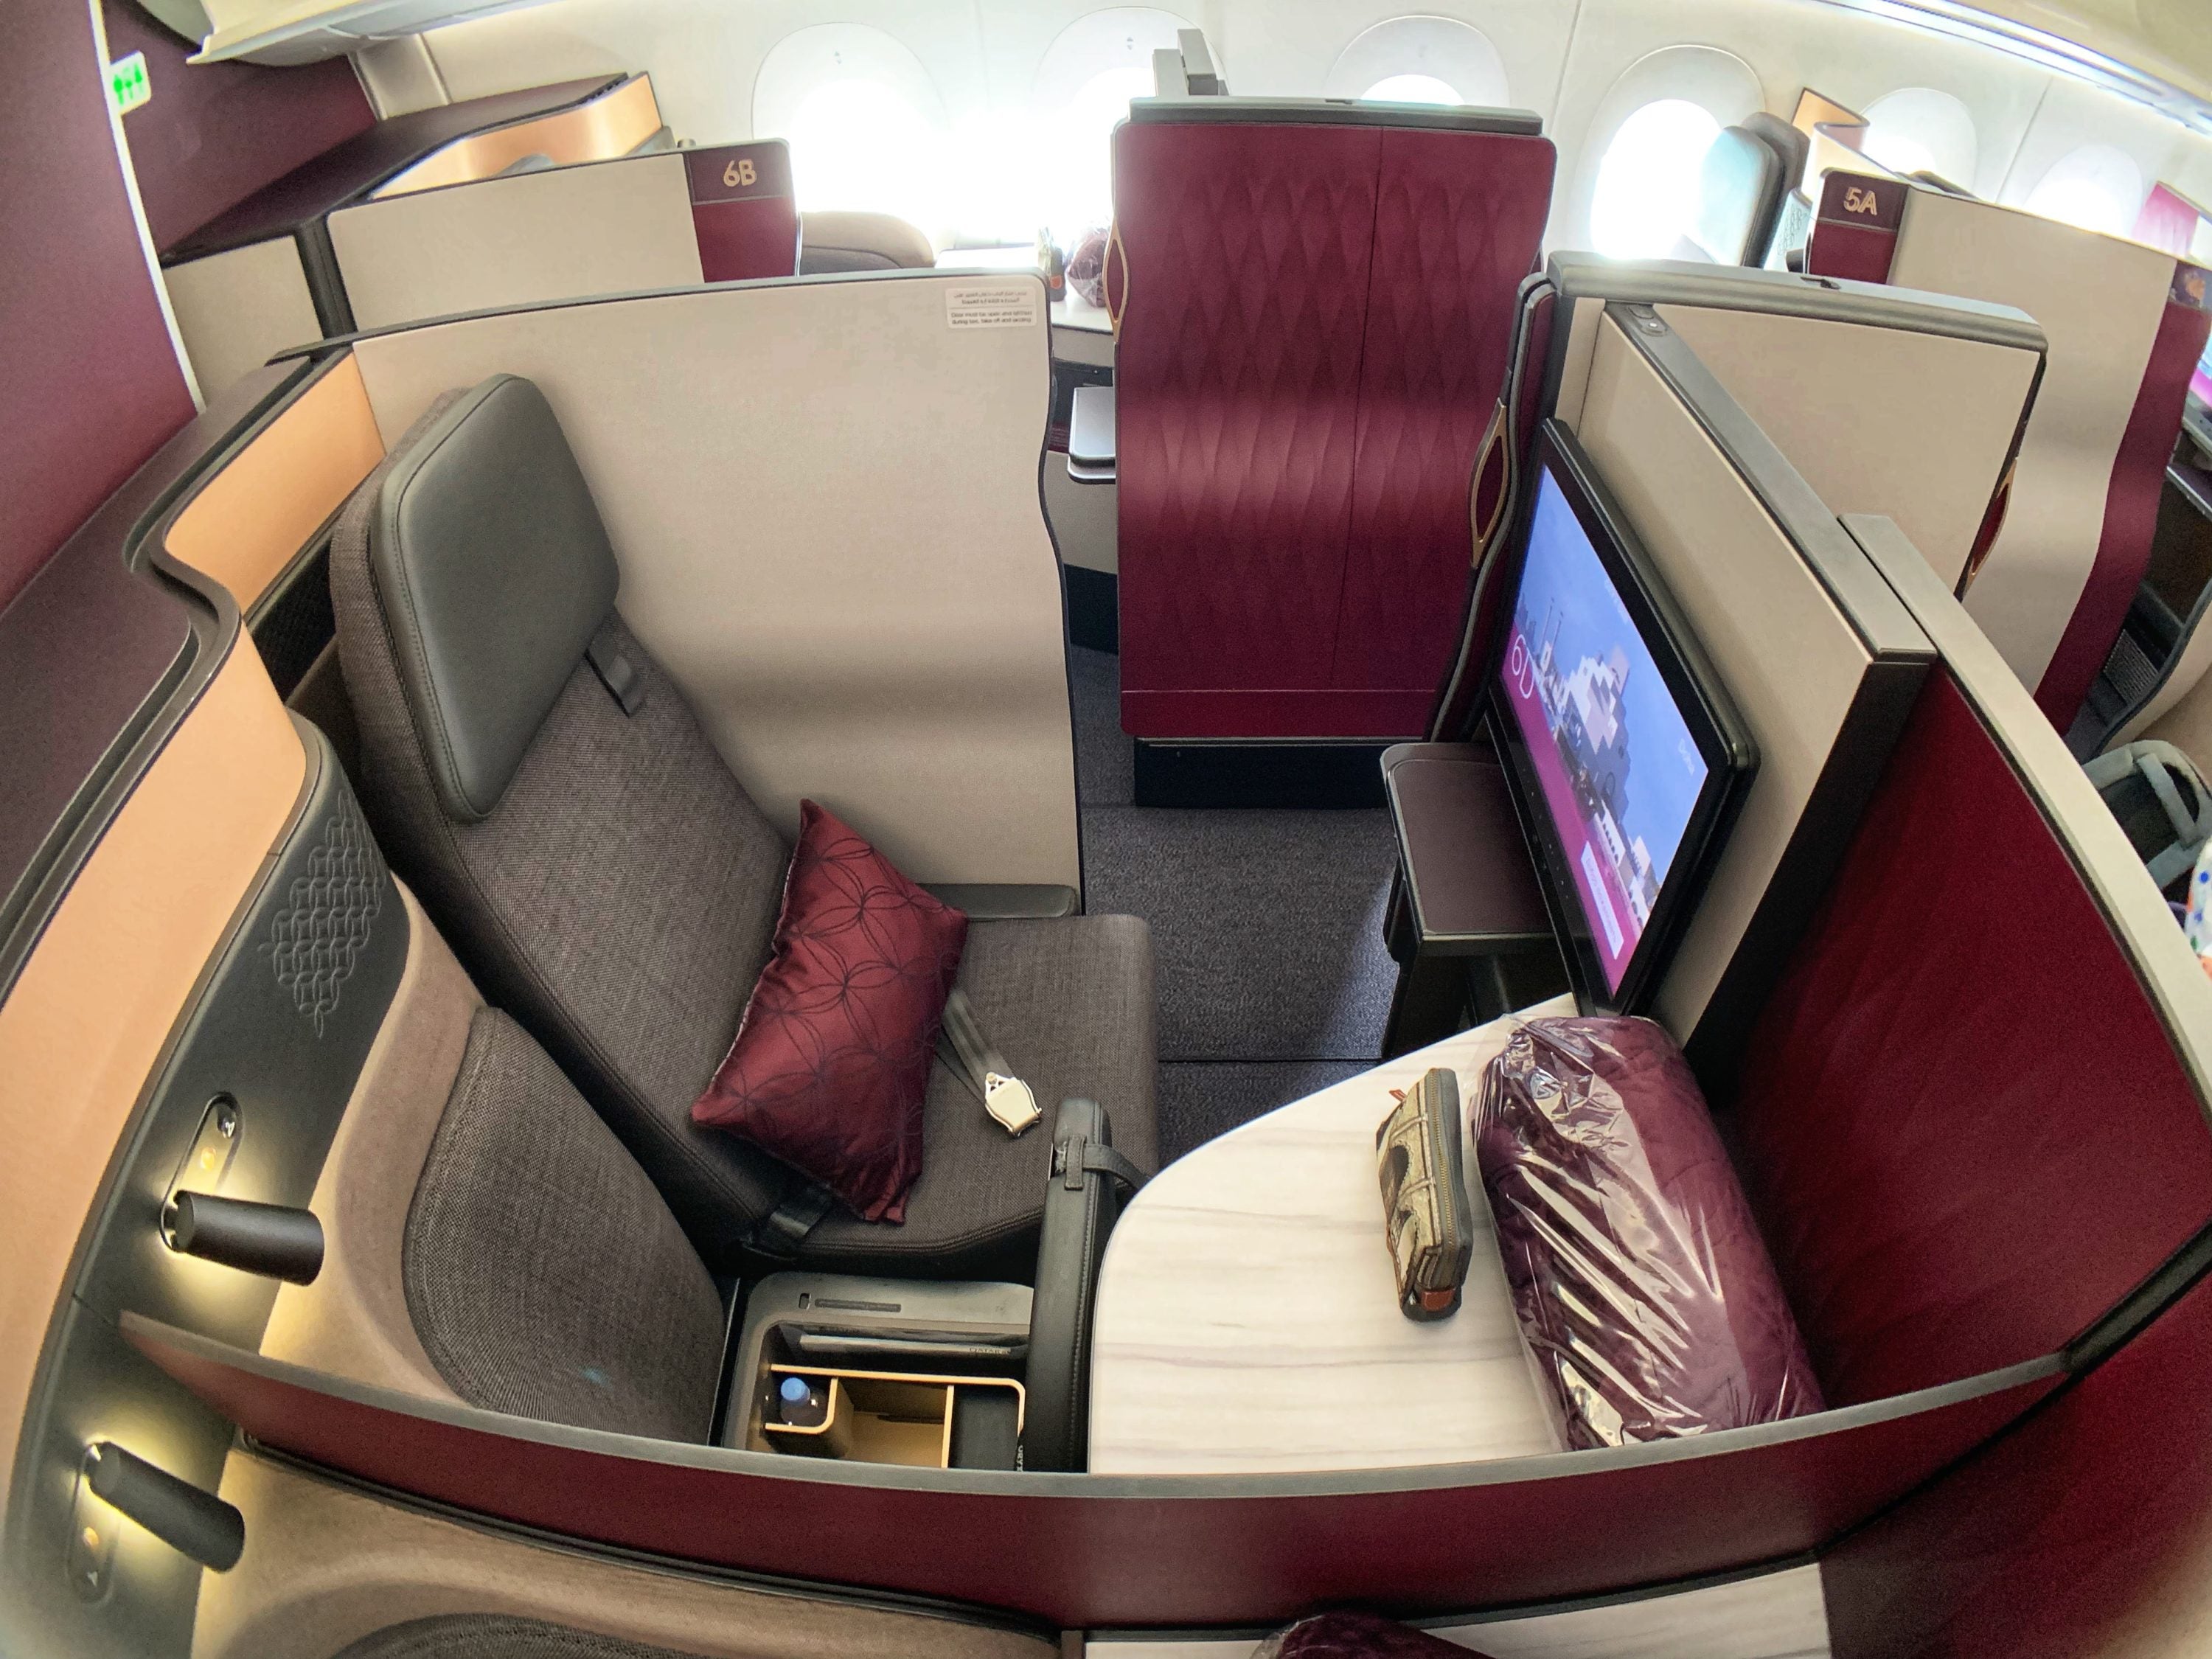 Qatar Airways Review: Seats, Amenities, Customer Service [2020]